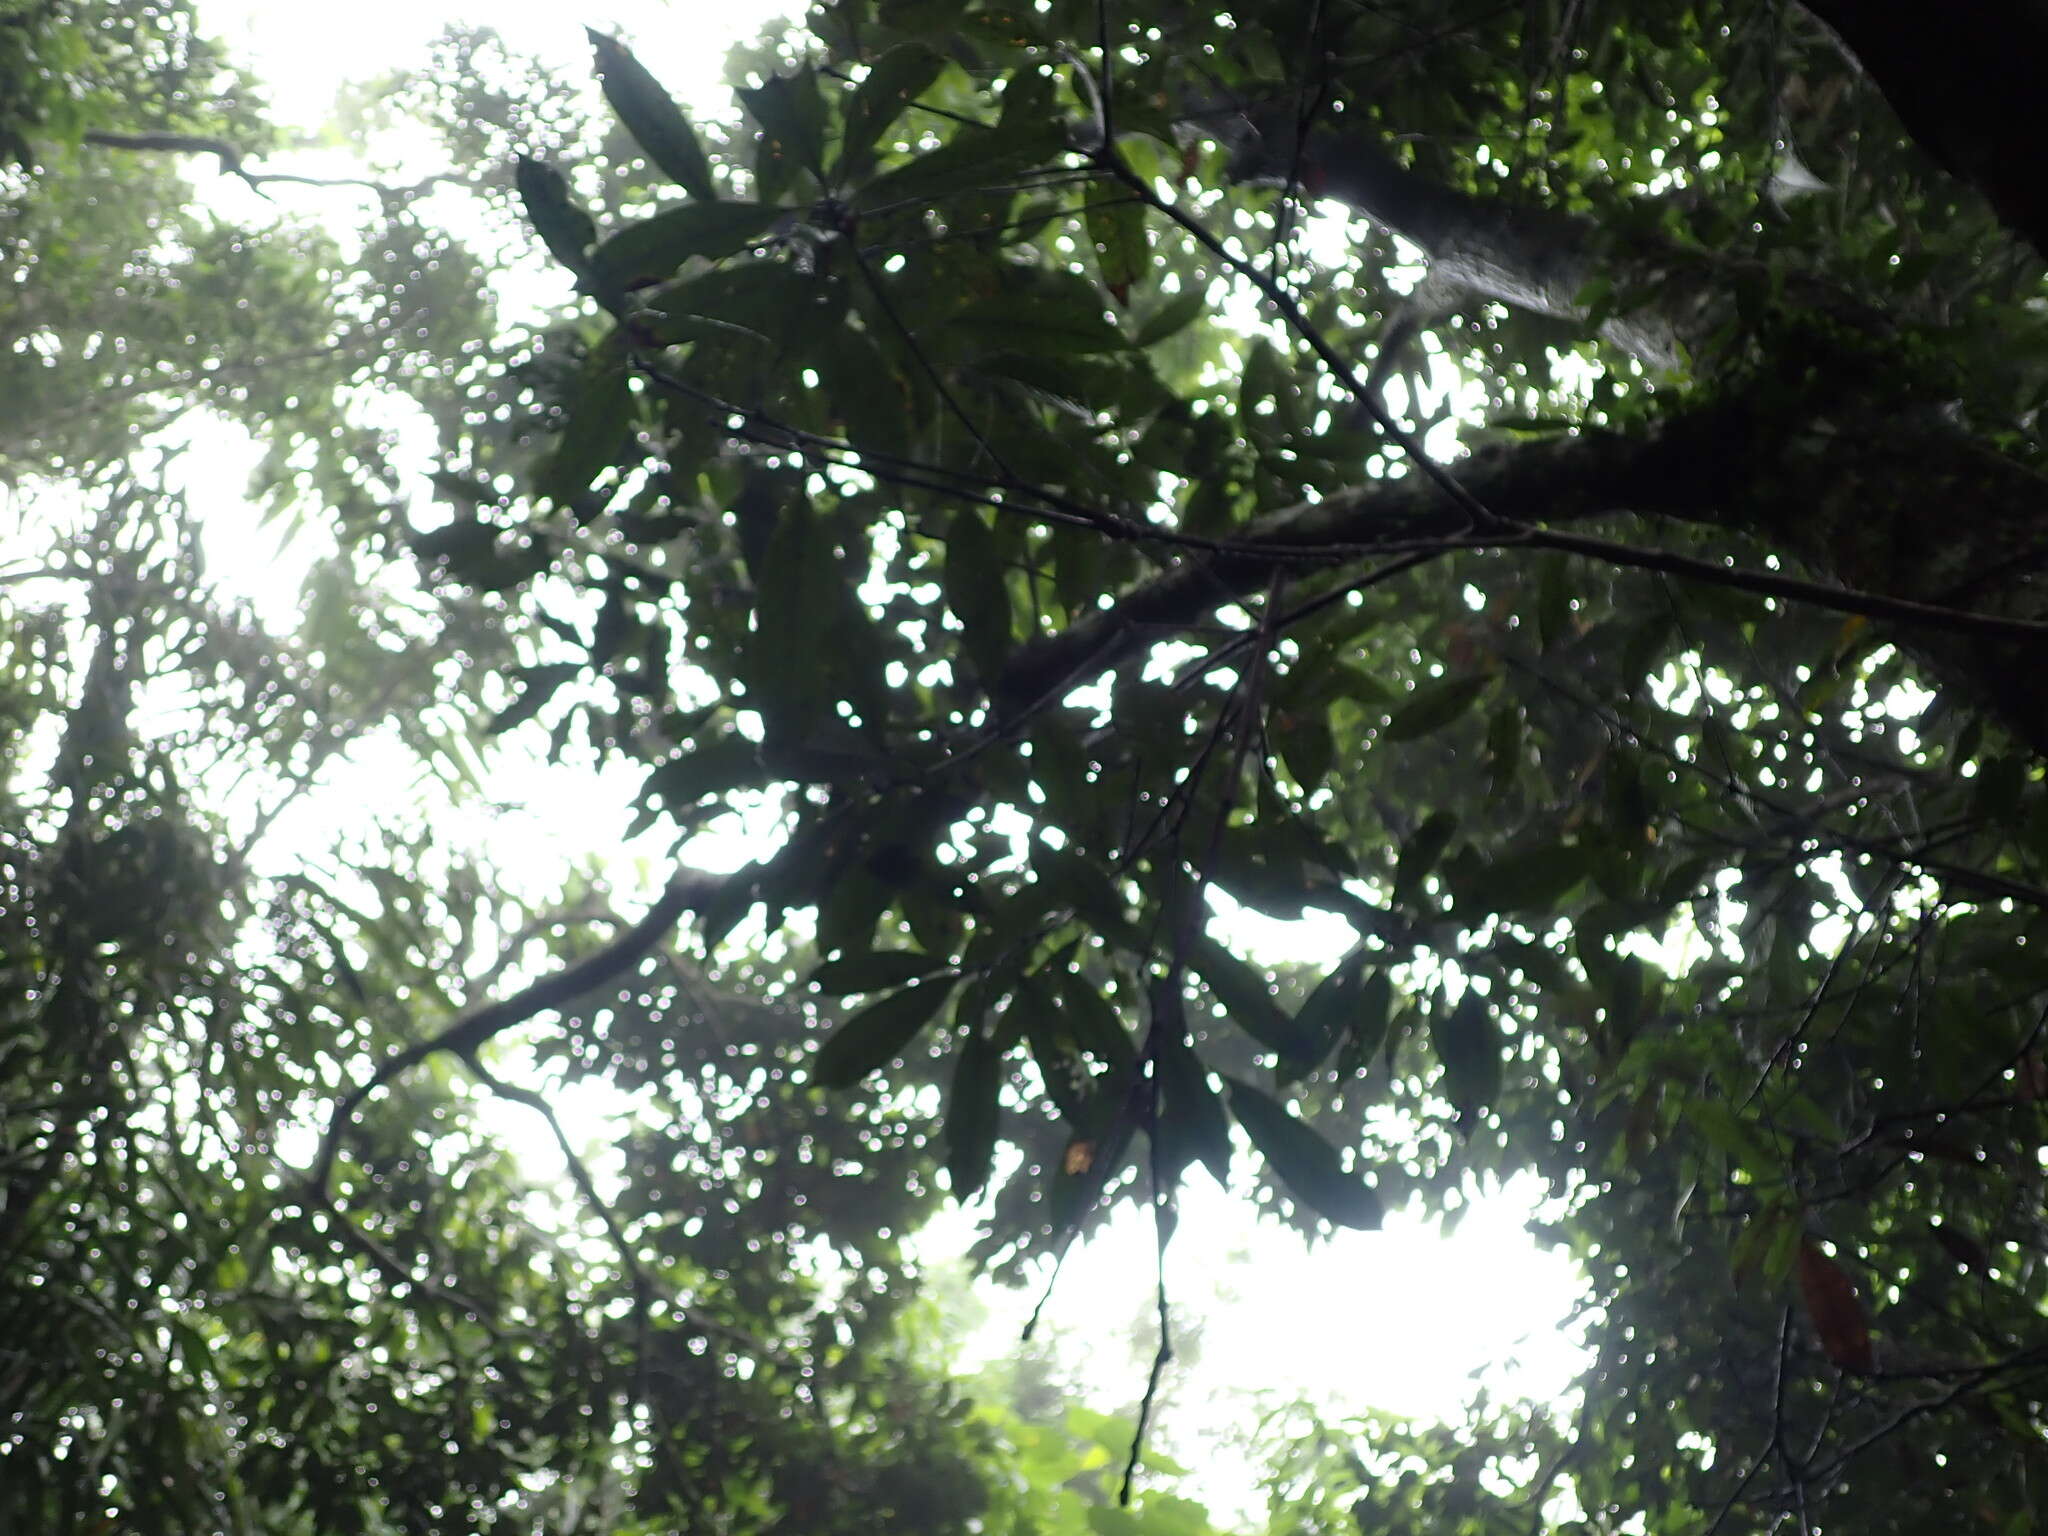 Image of Lithocarpus brevicaudatus (Skan) Hayata